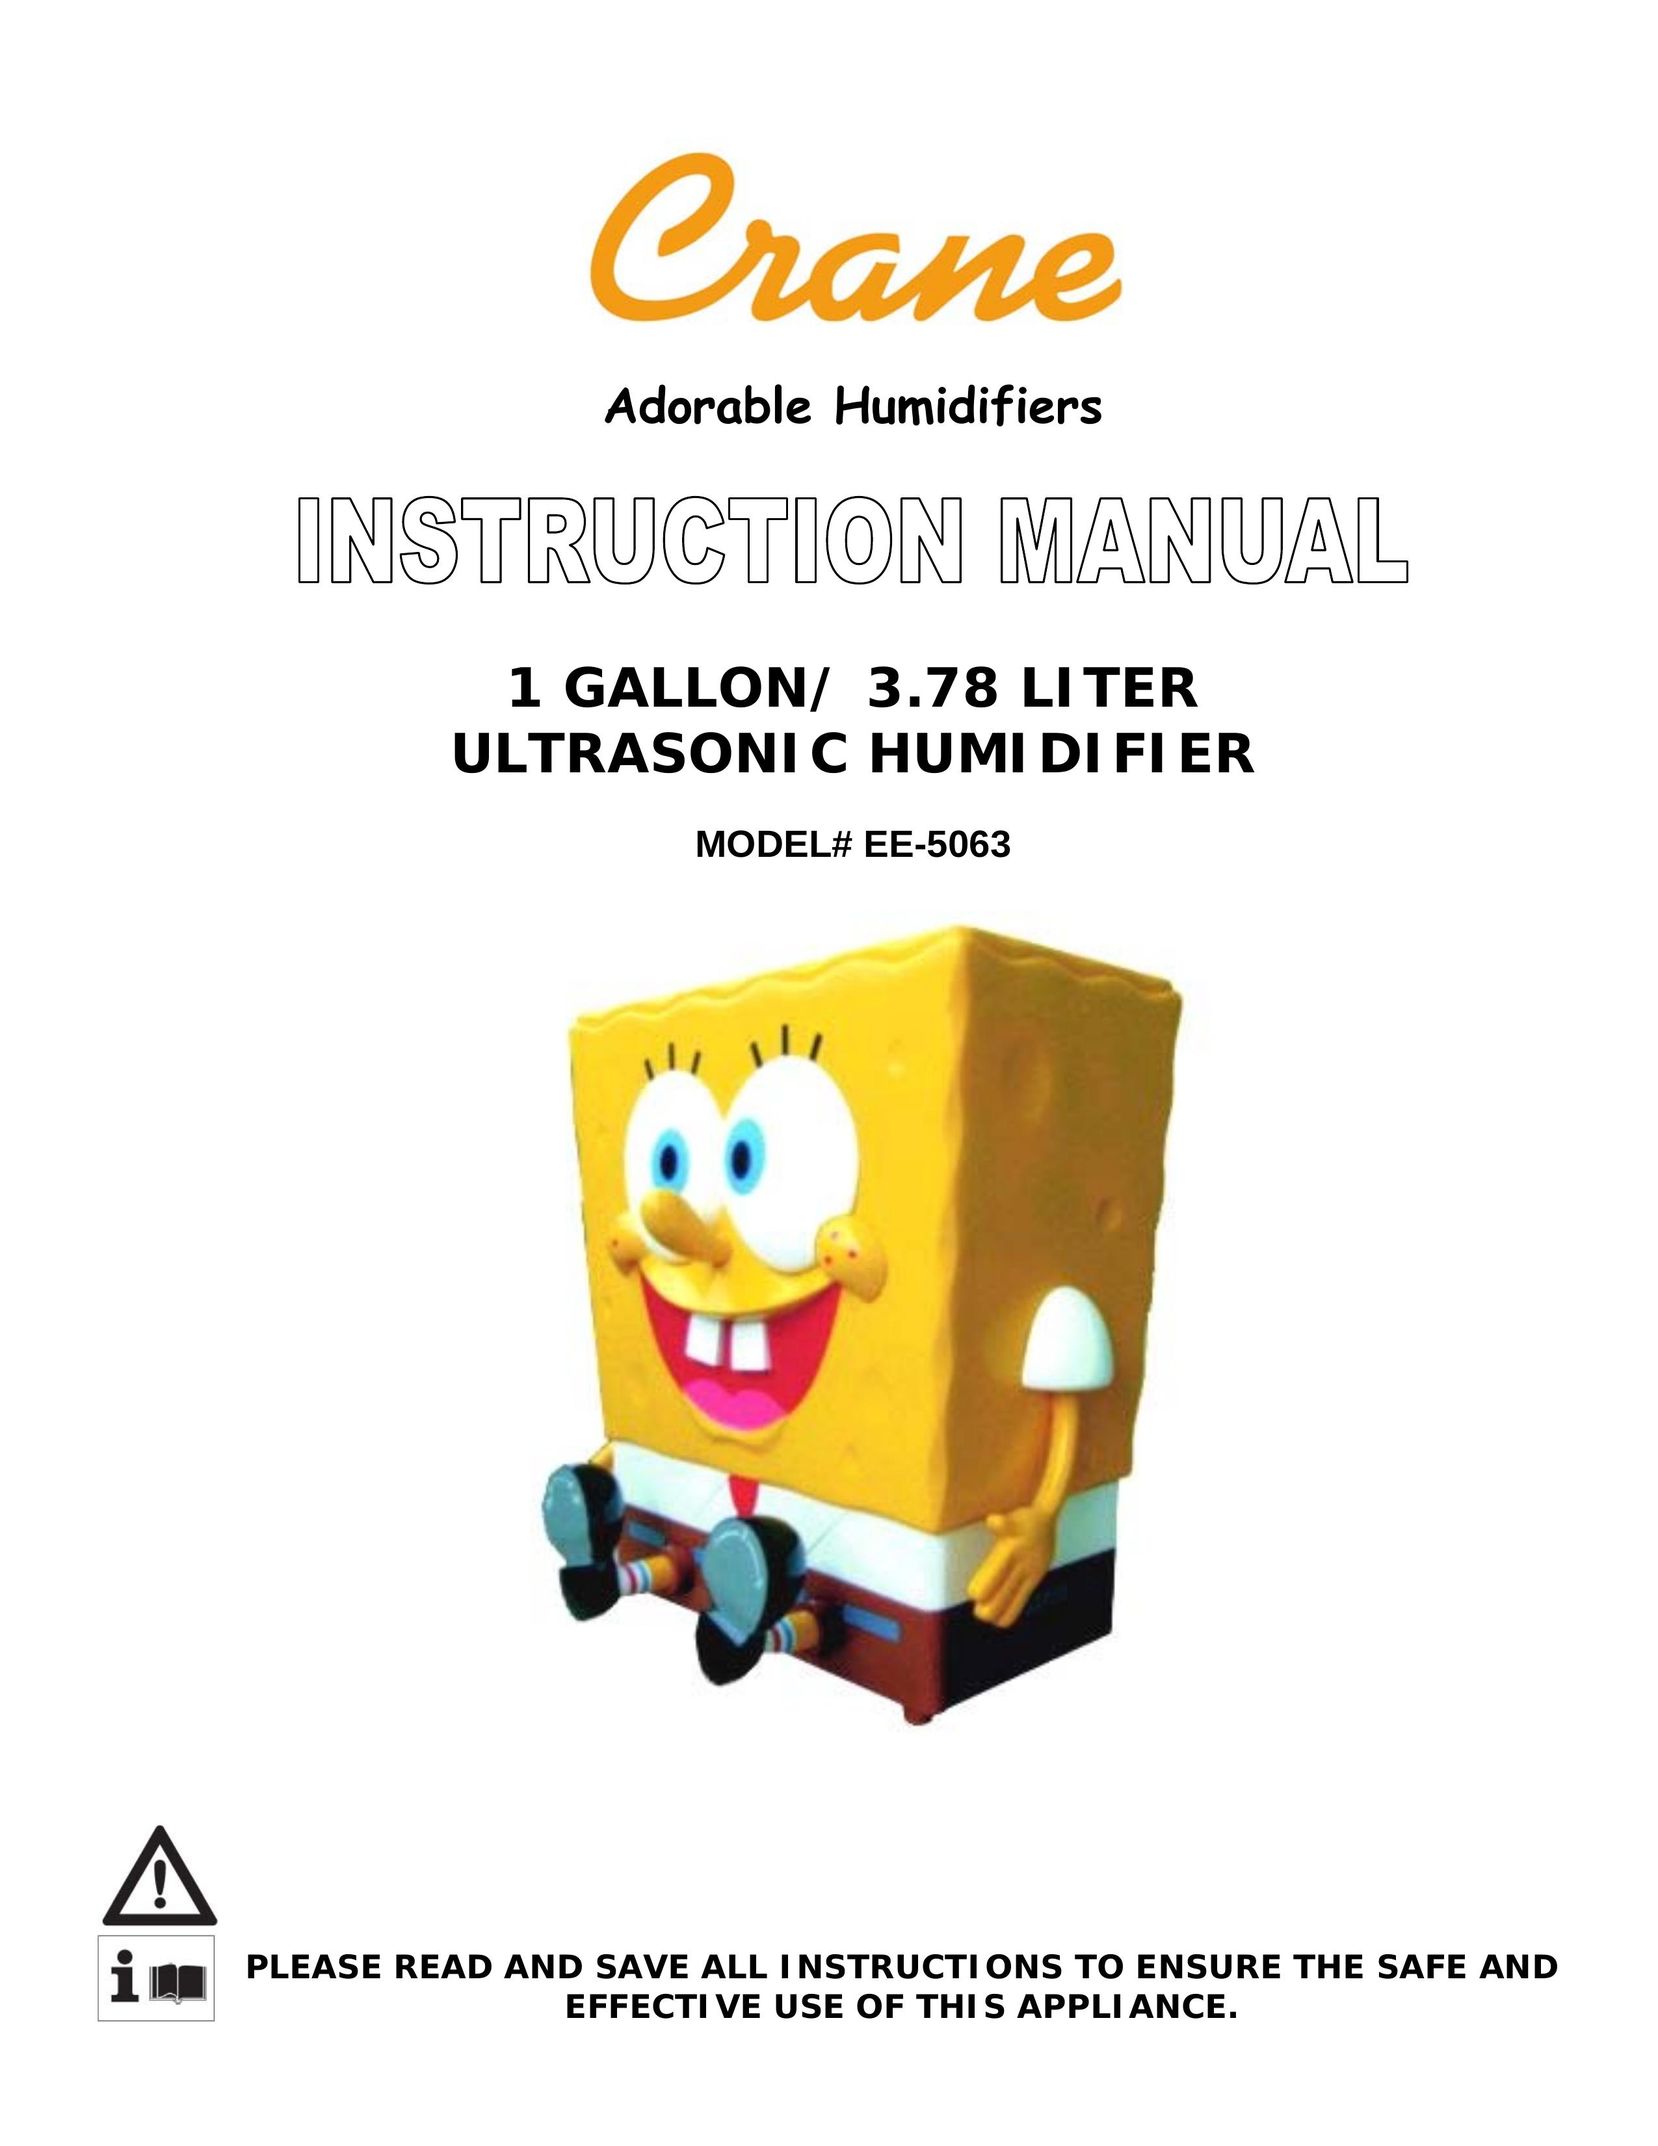 Crane EE-5063 Humidifier User Manual